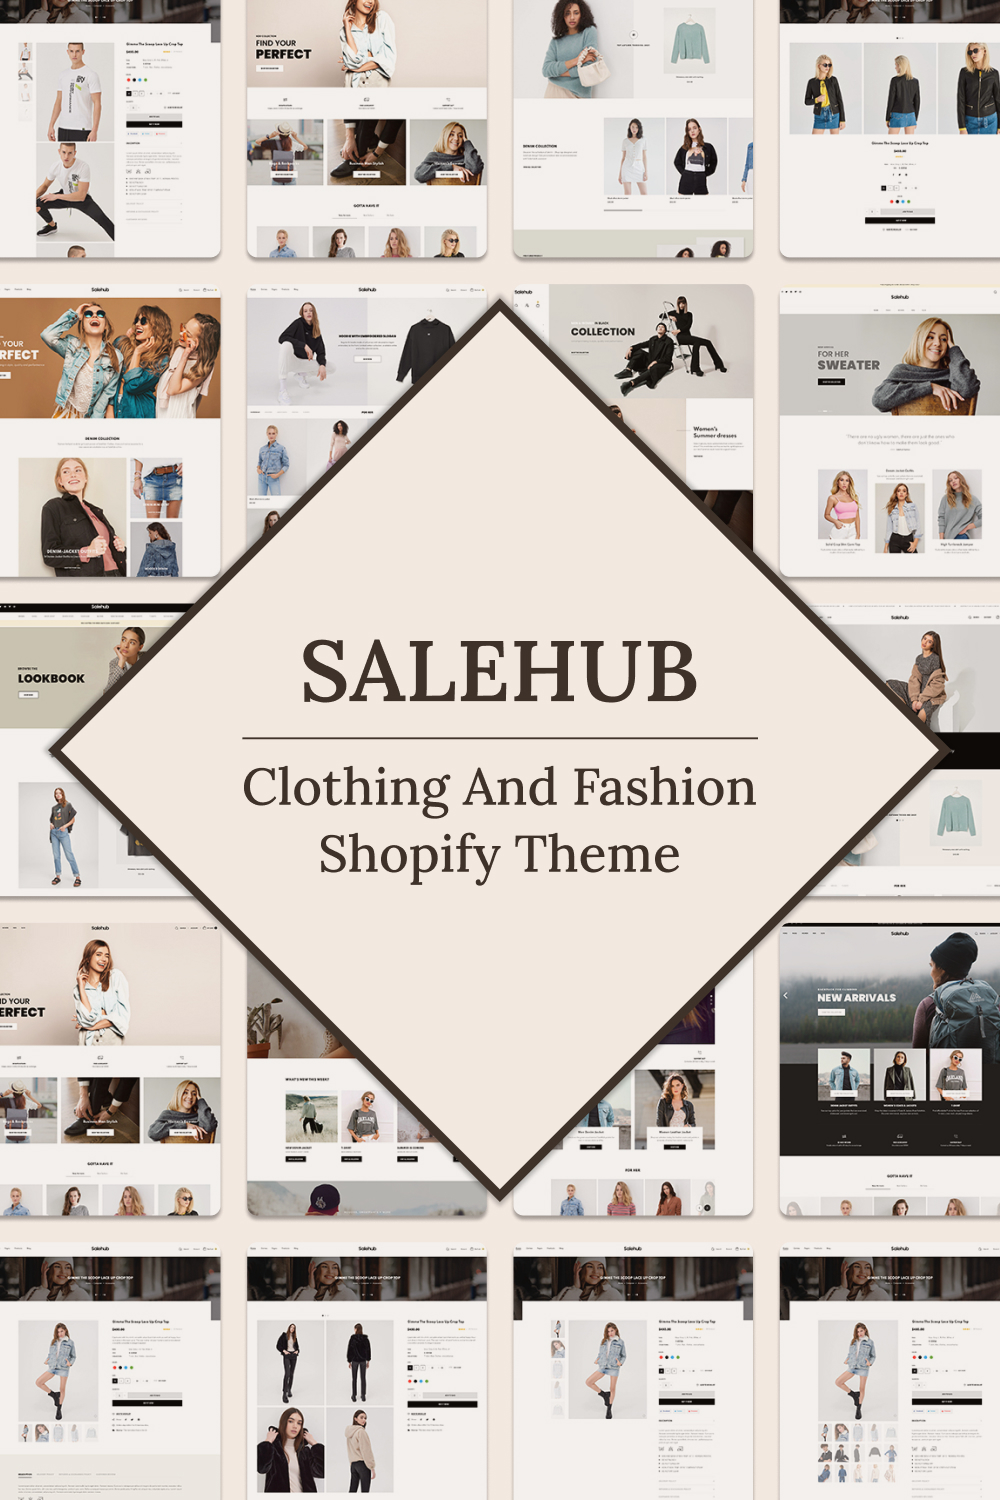 Pinterest illustrations of salehub clothing and fashion shopify theme.